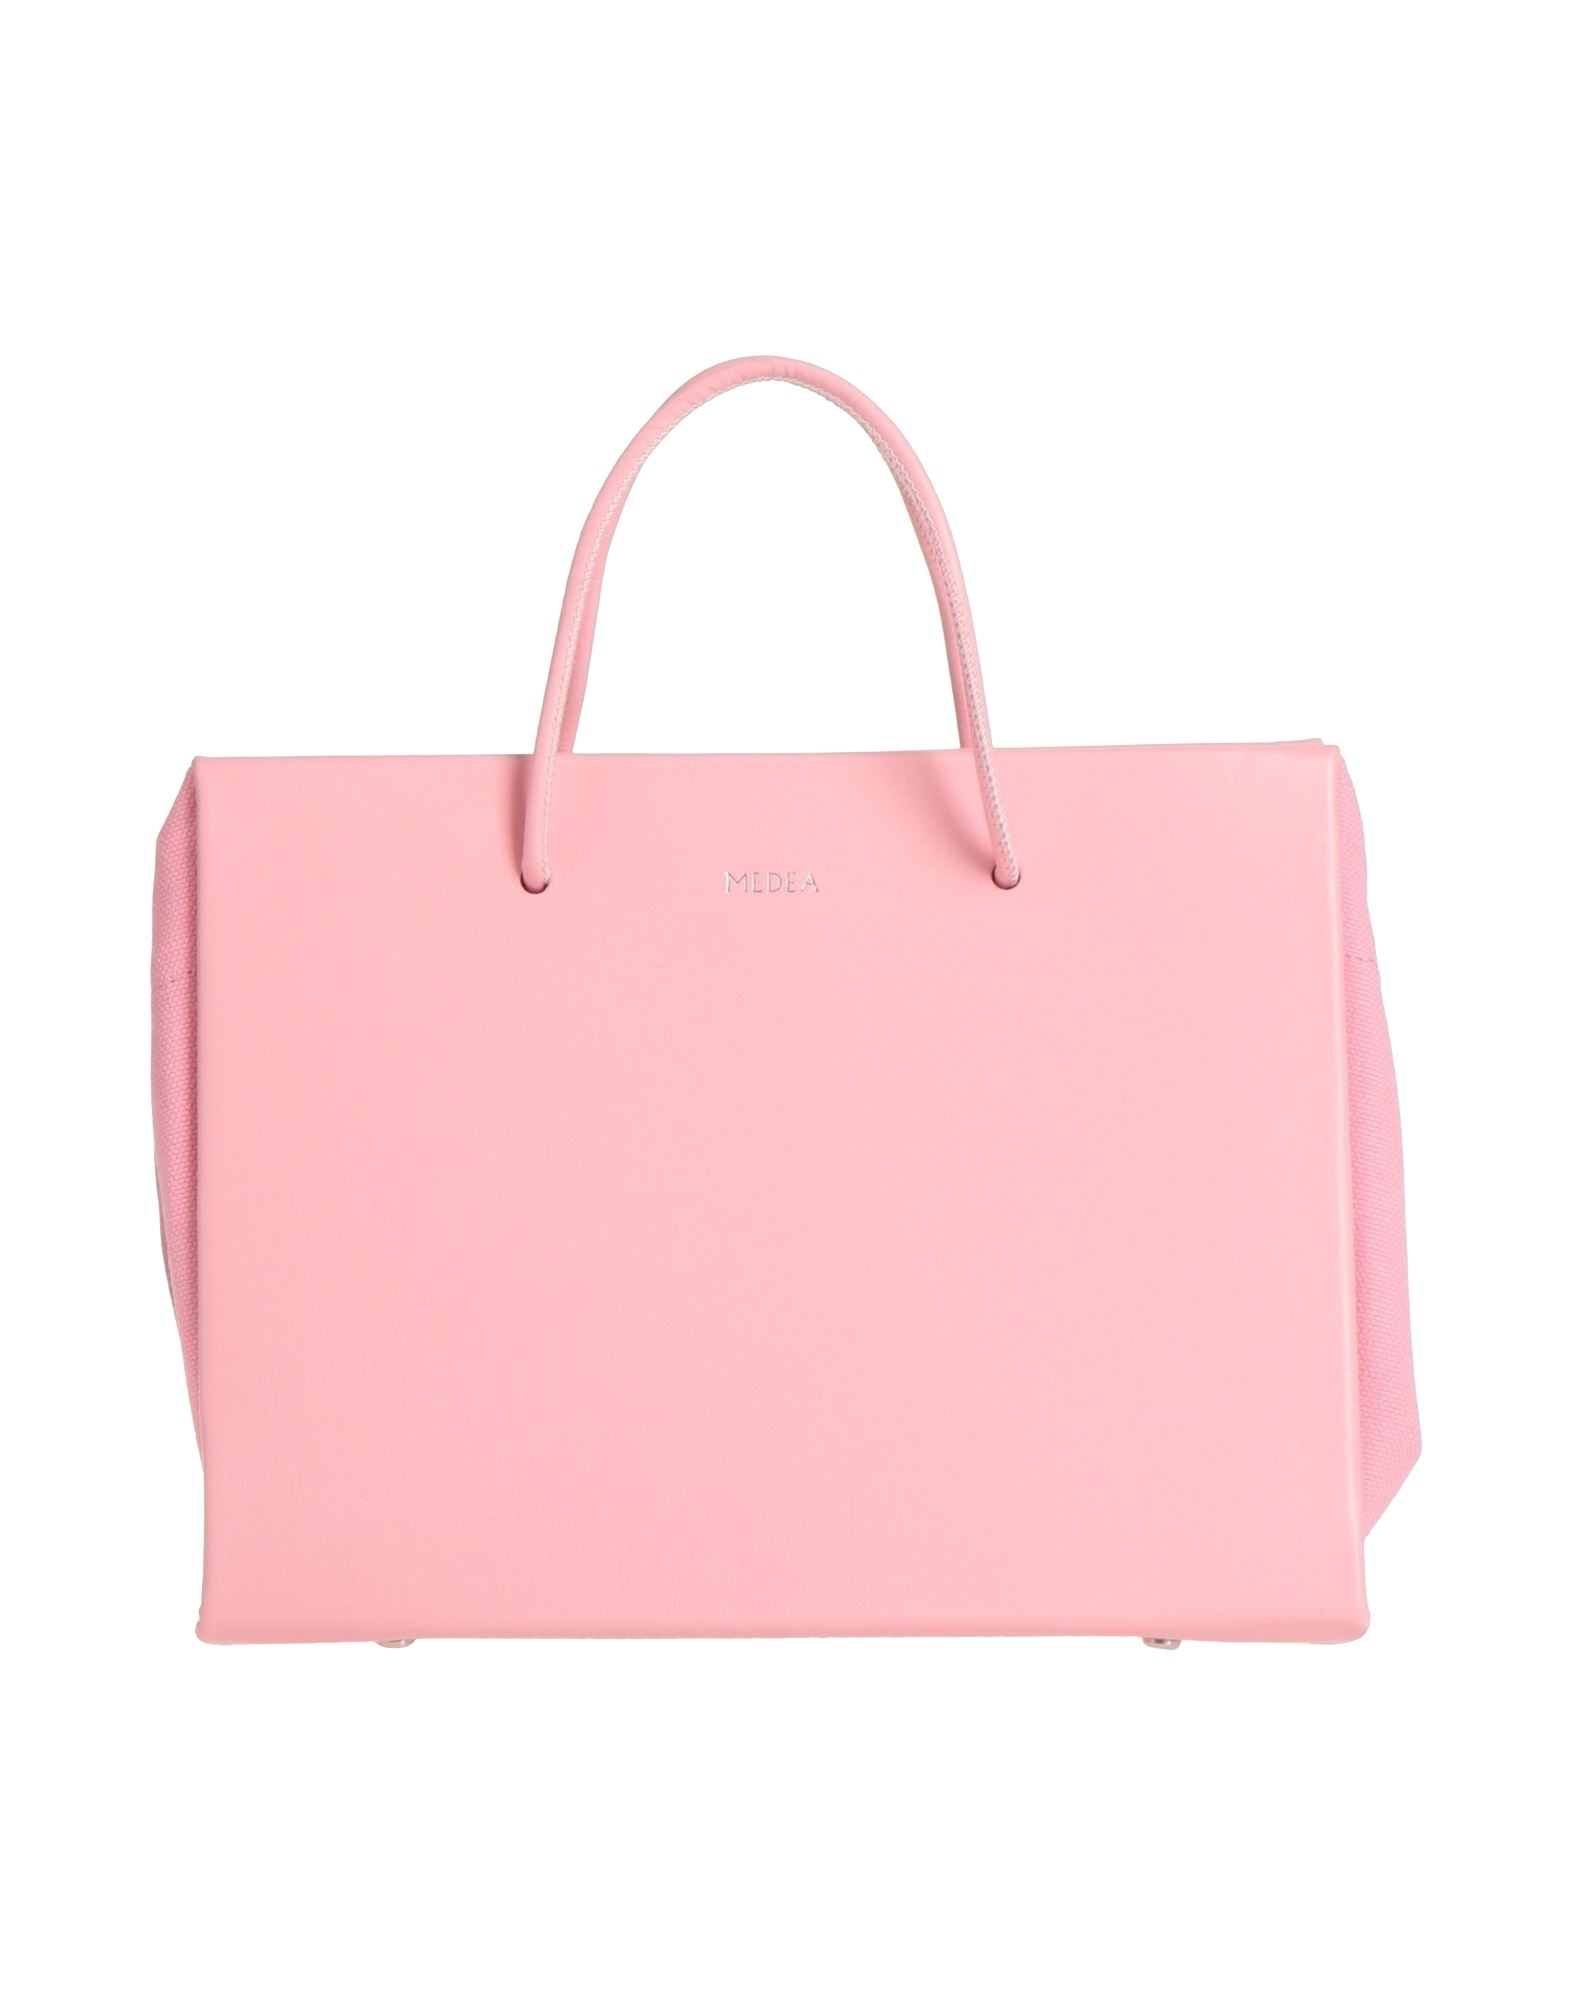 Medea Handbags In Pink